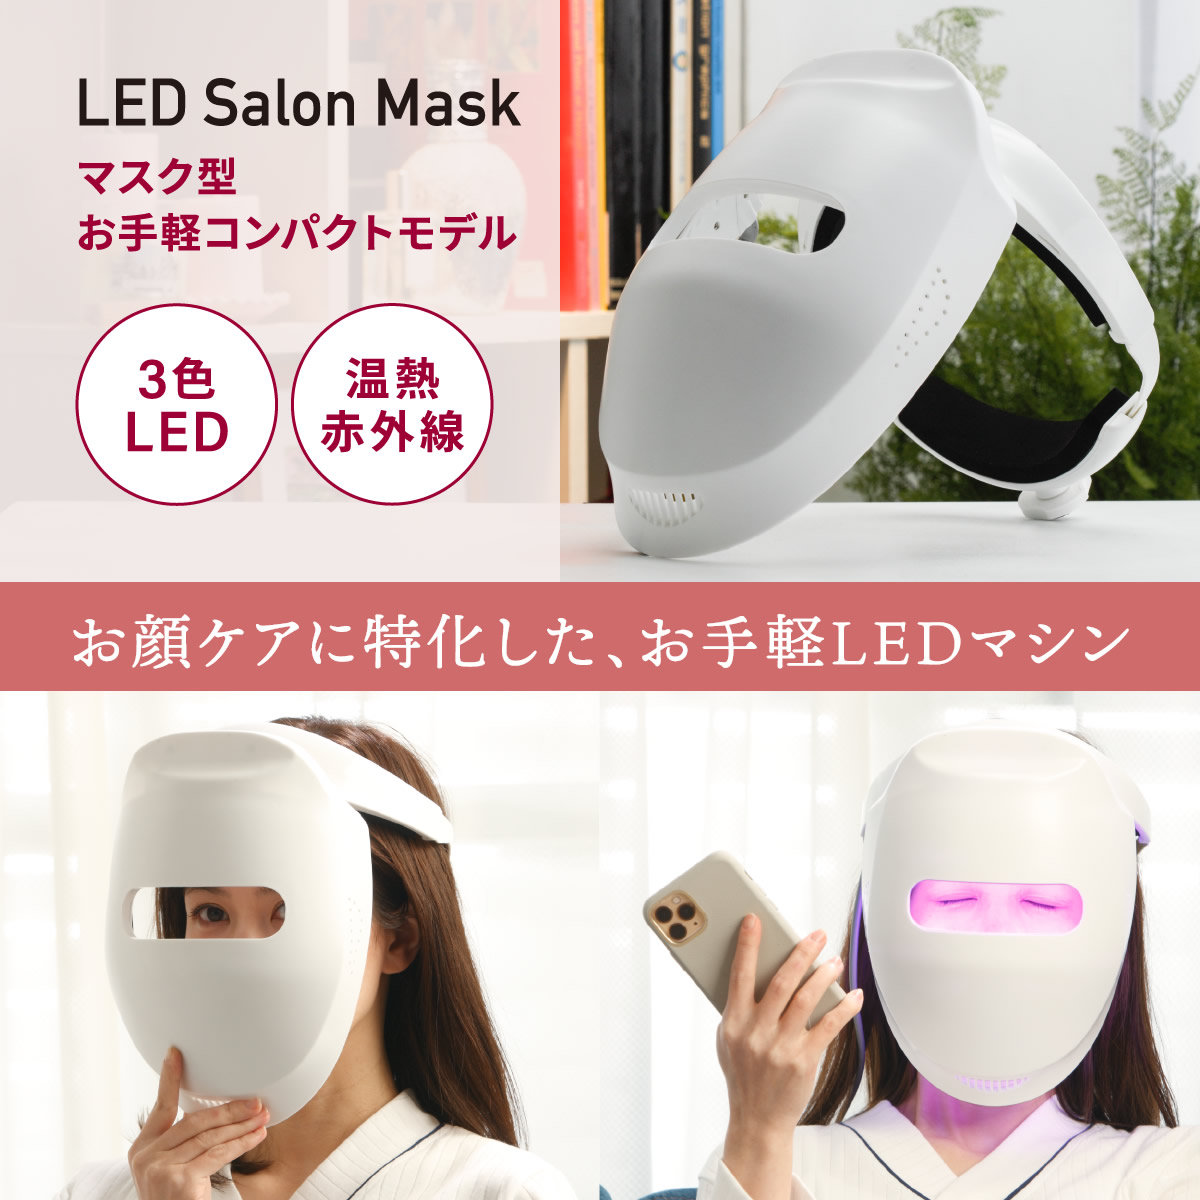 LED Salon Maskはマスク型お手軽コンパクトモデル。お顔ケアに特化した、お手軽LEDマシン